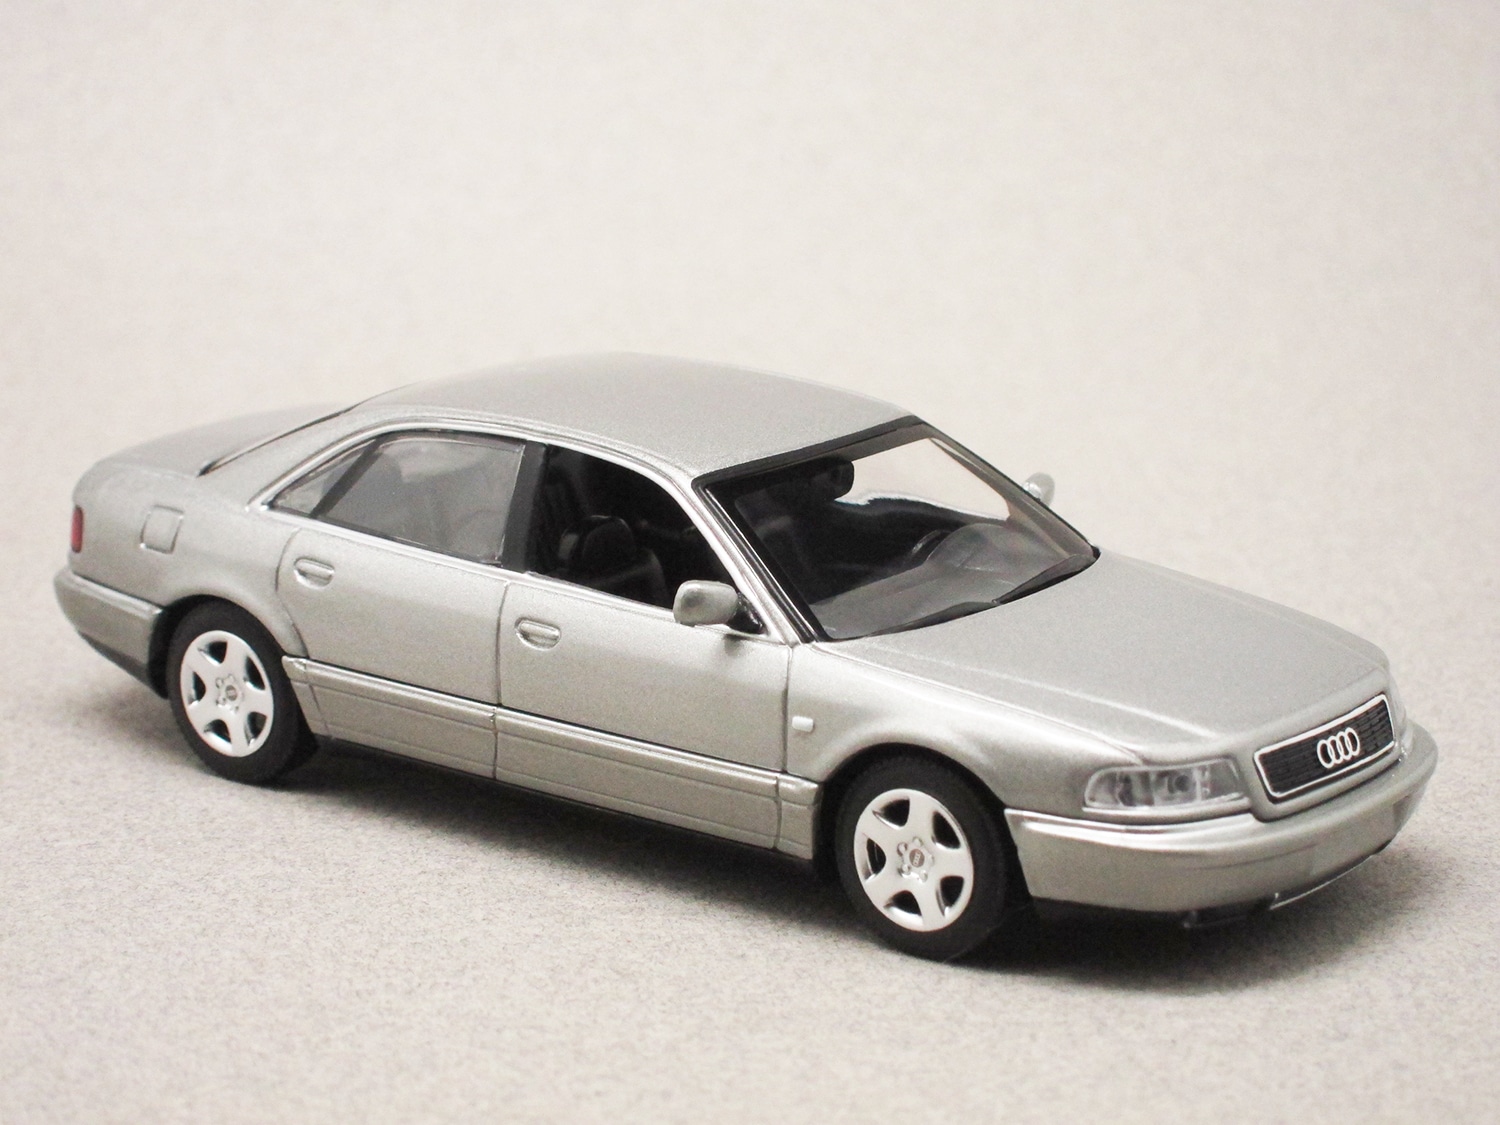 Audi A8 1999 silver (Maxichamps) 1/43e